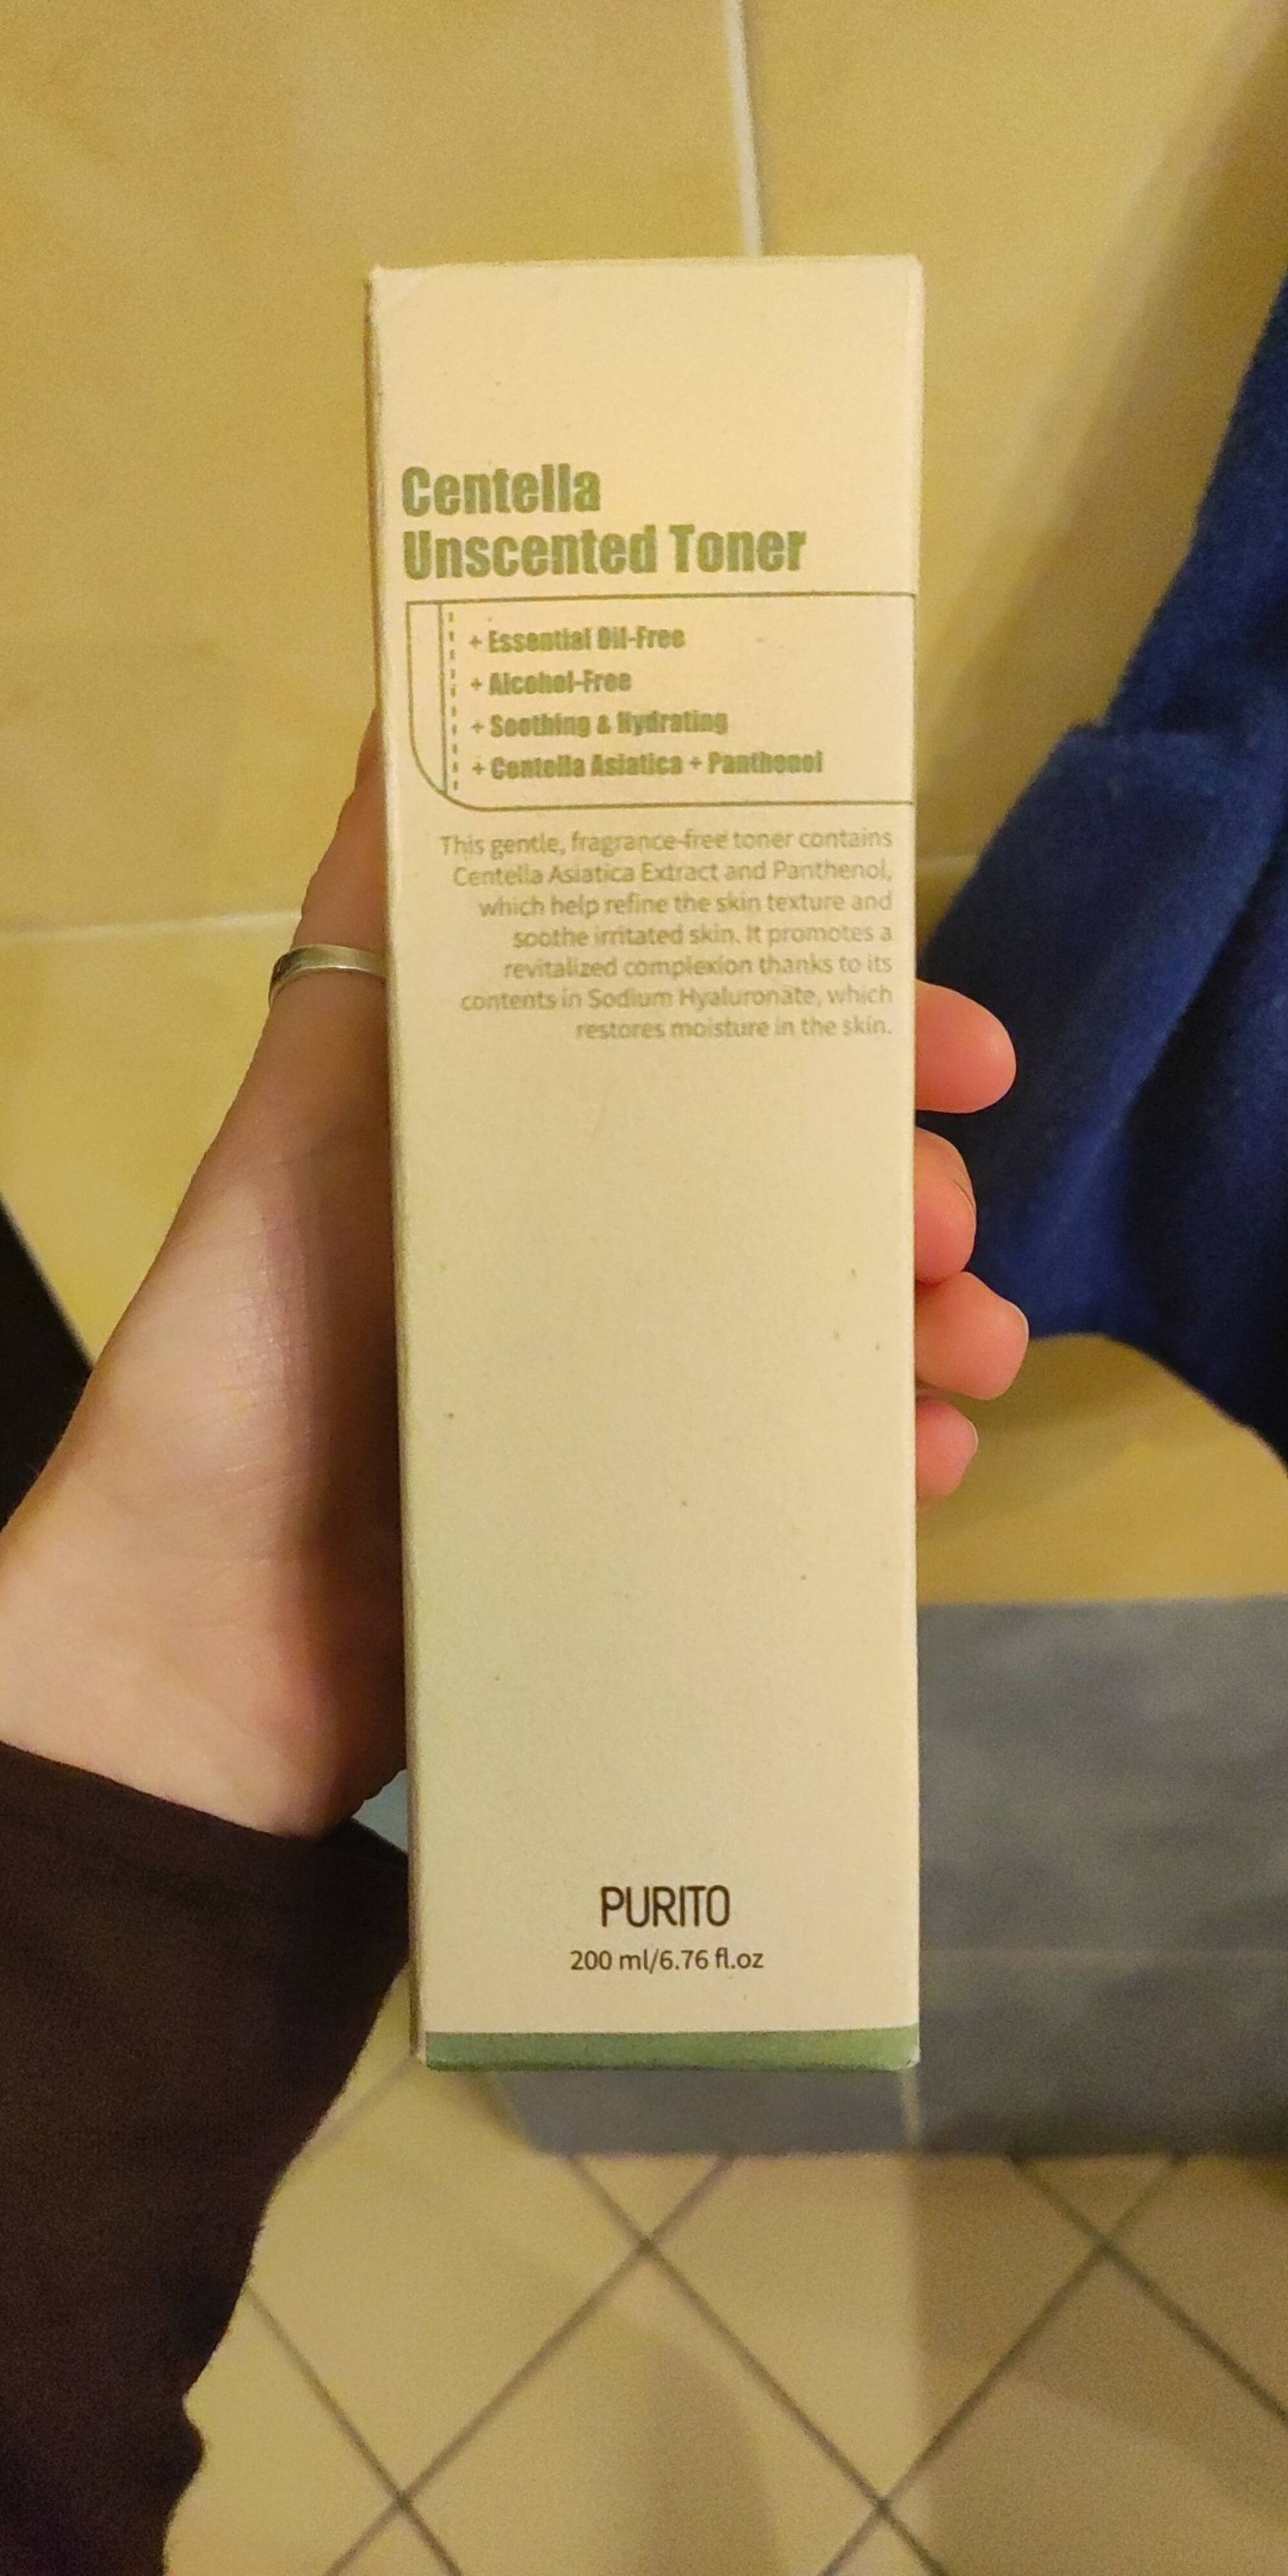 PURITO - Centella unscented toner